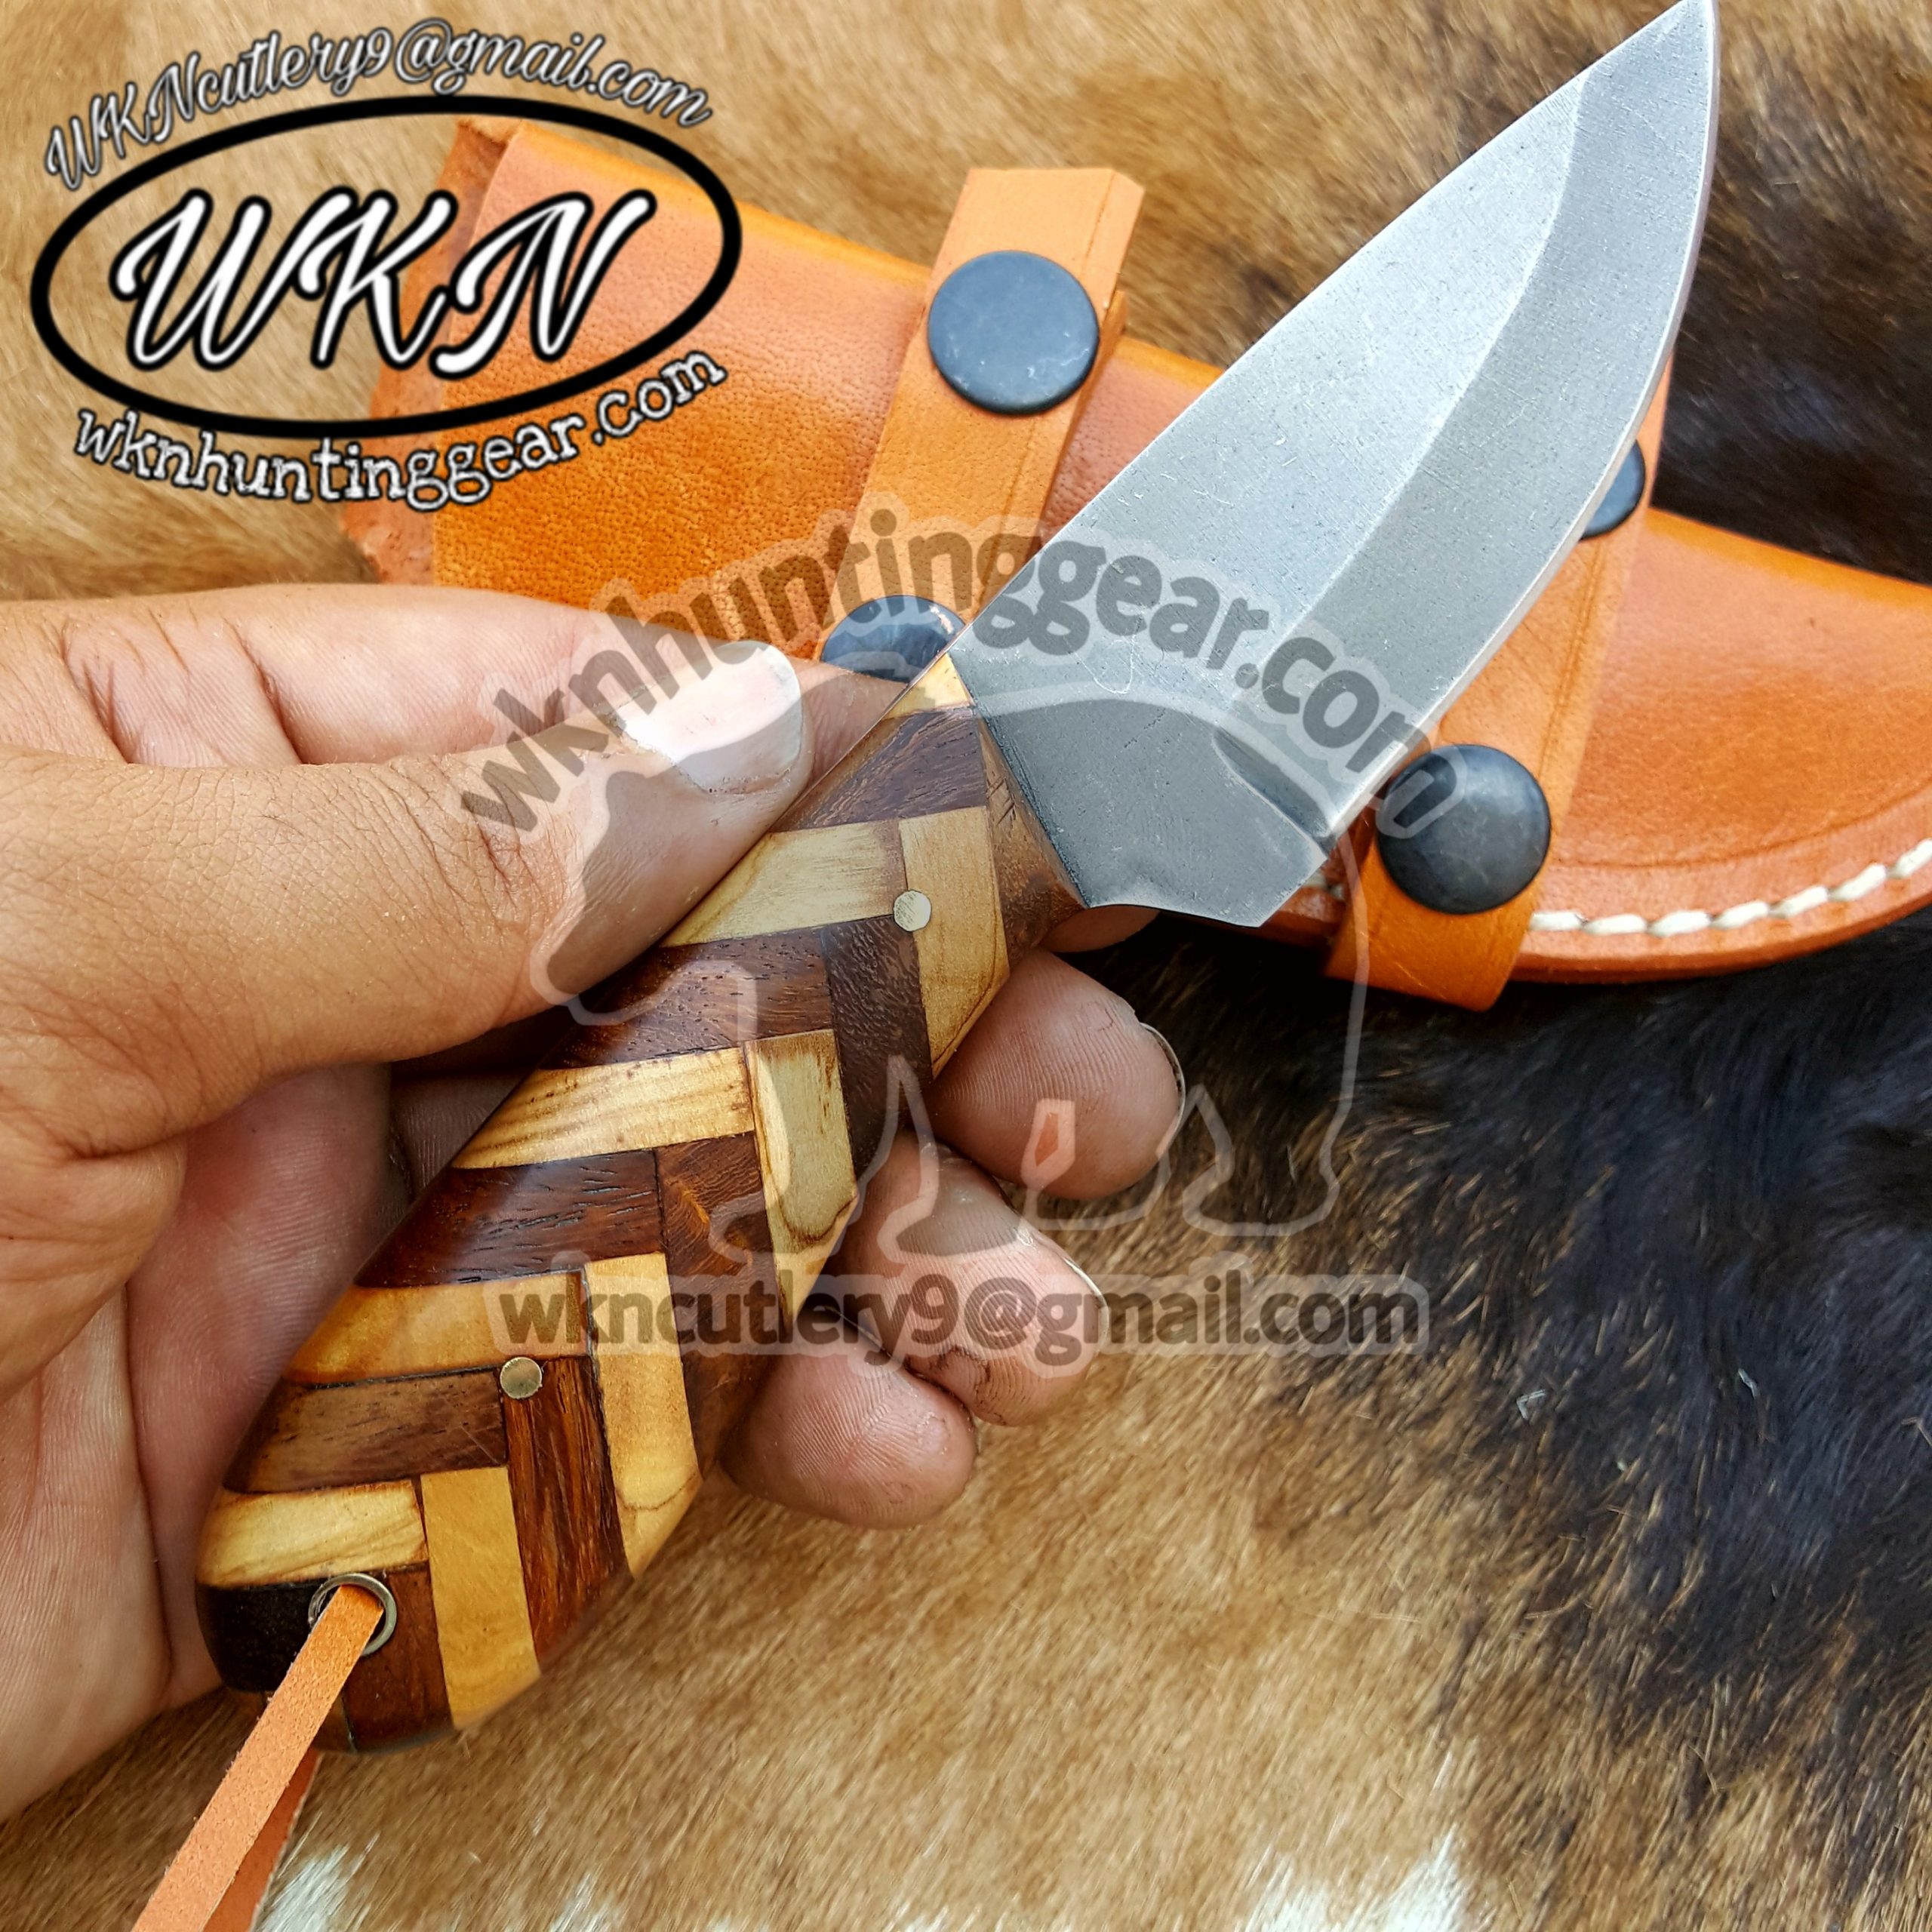 Custom Made 1095 Steel Cowboy and Skinner knives set - WKN